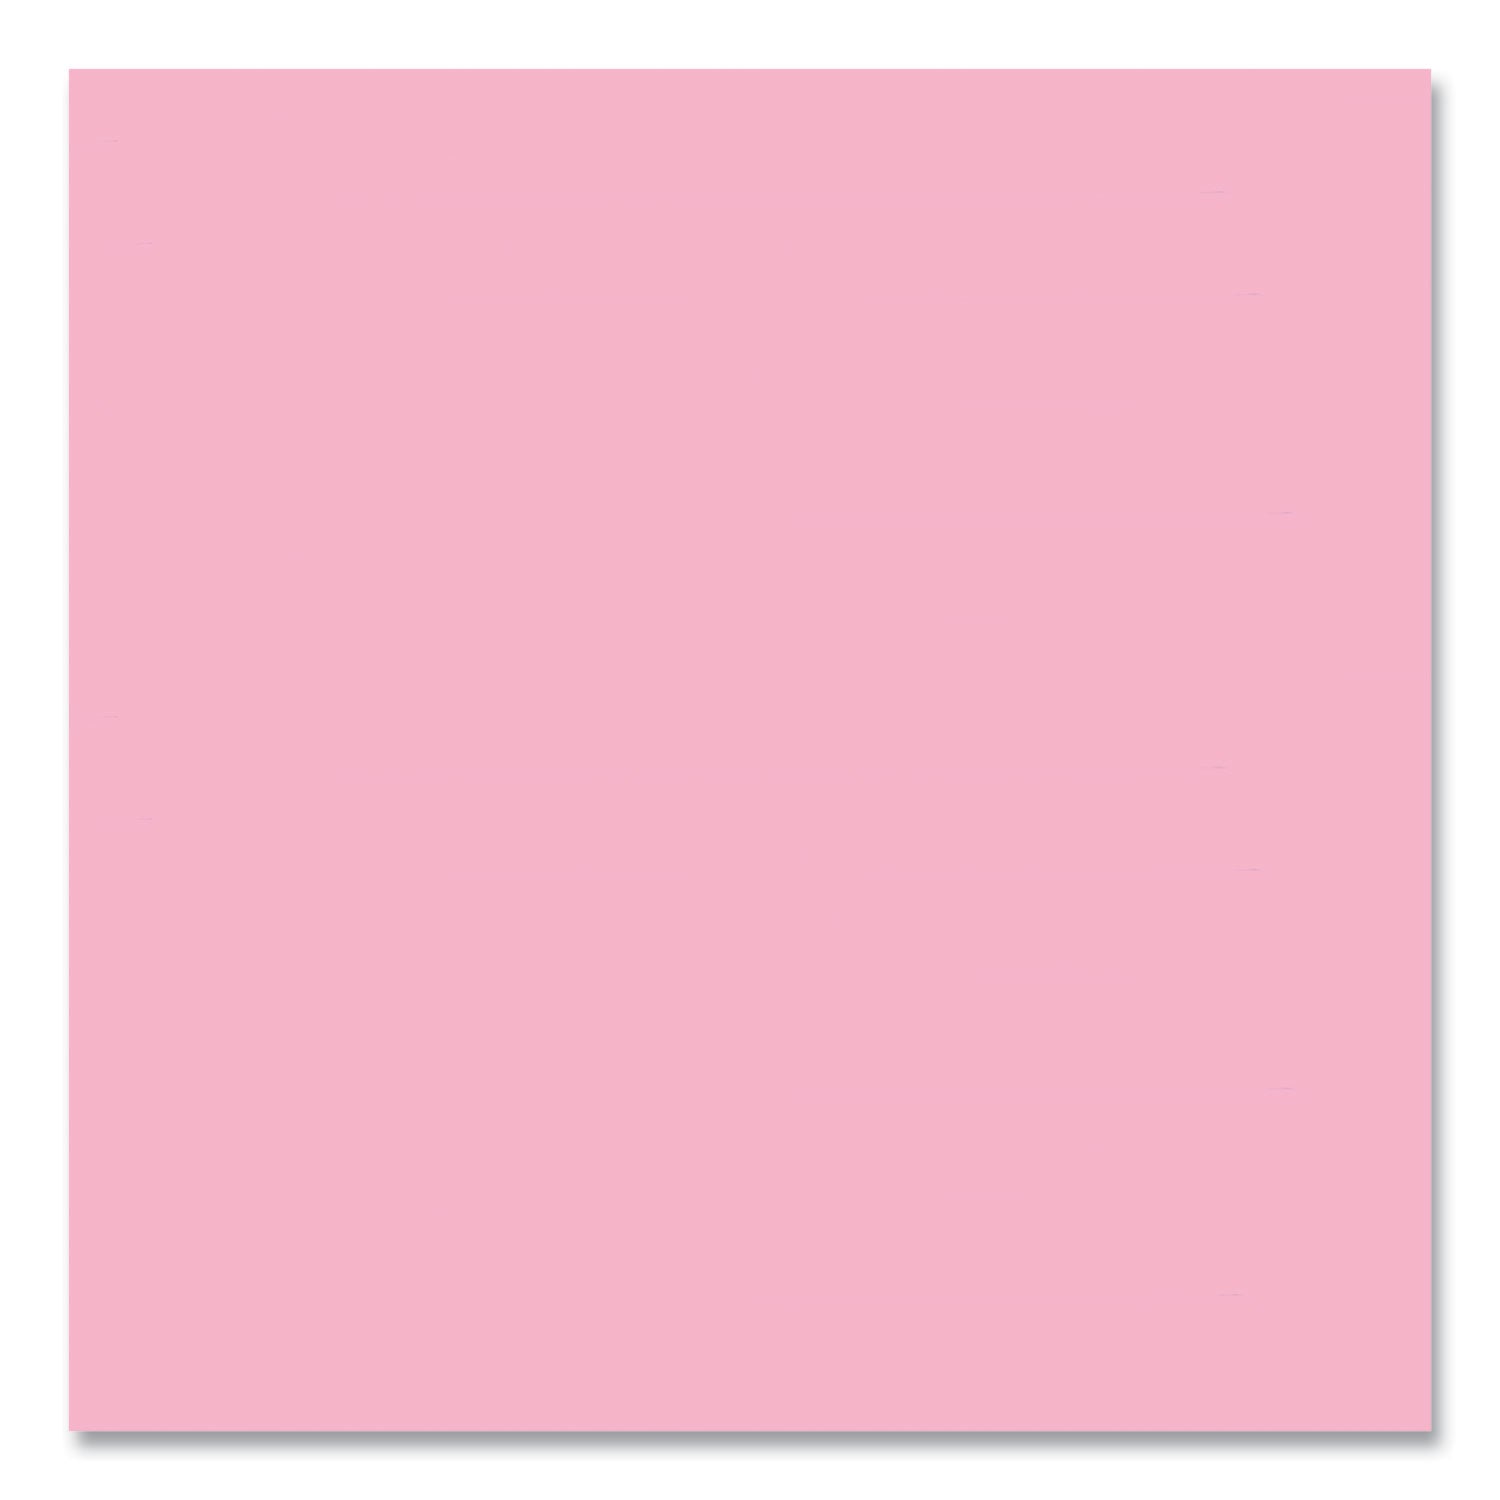 enviroshades-steno-pad-gregg-rule-white-cover-80-pink-6-x-9-sheets-24-pads-carton-ships-in-4-6-business-days_roa12254cs - 6